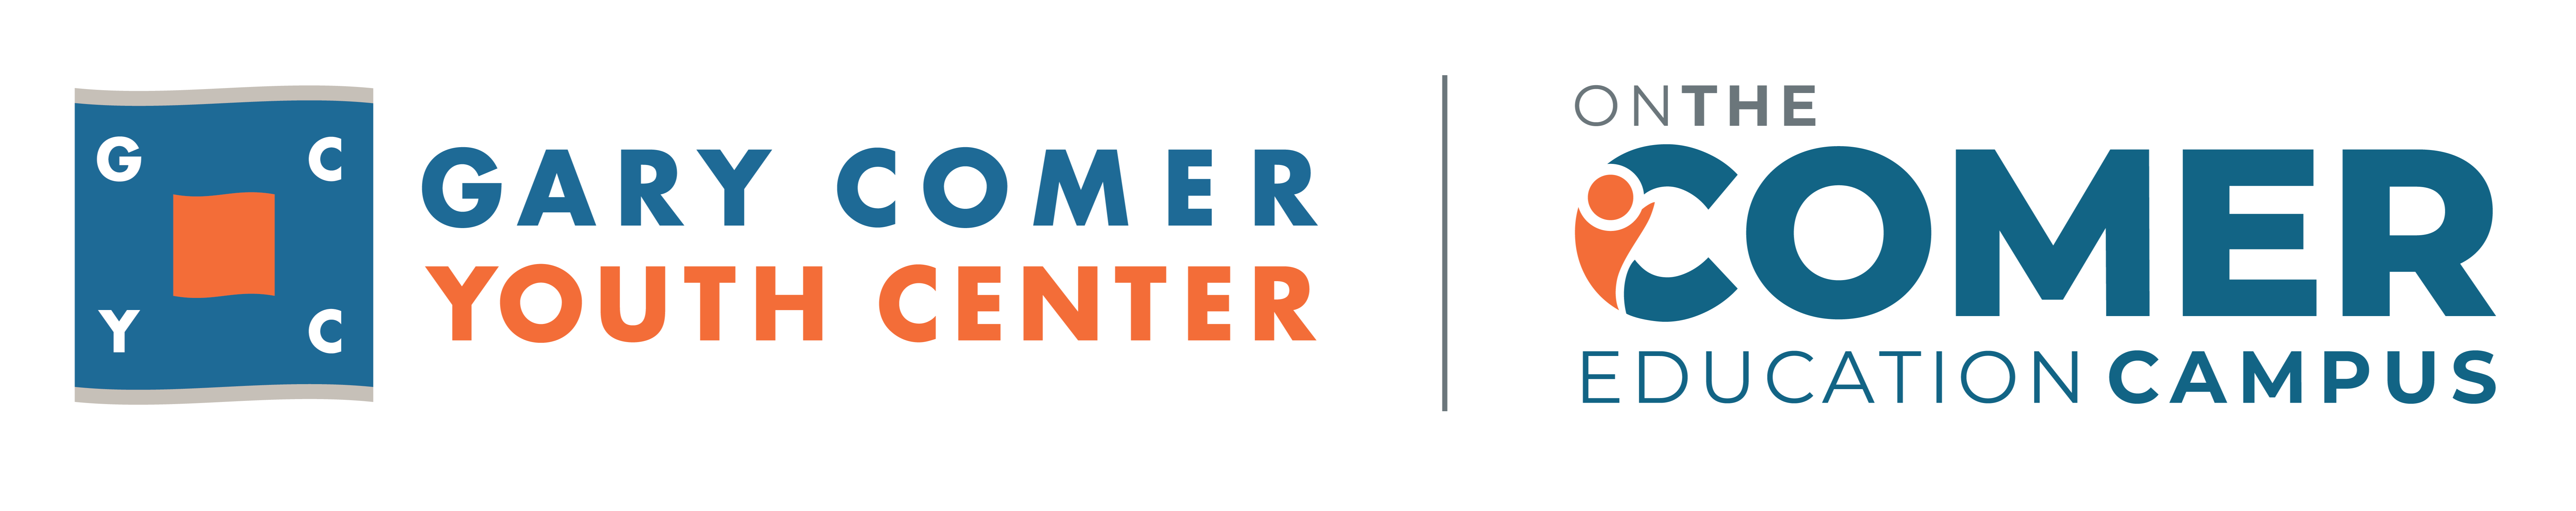 Gary Comer Youth Center logo